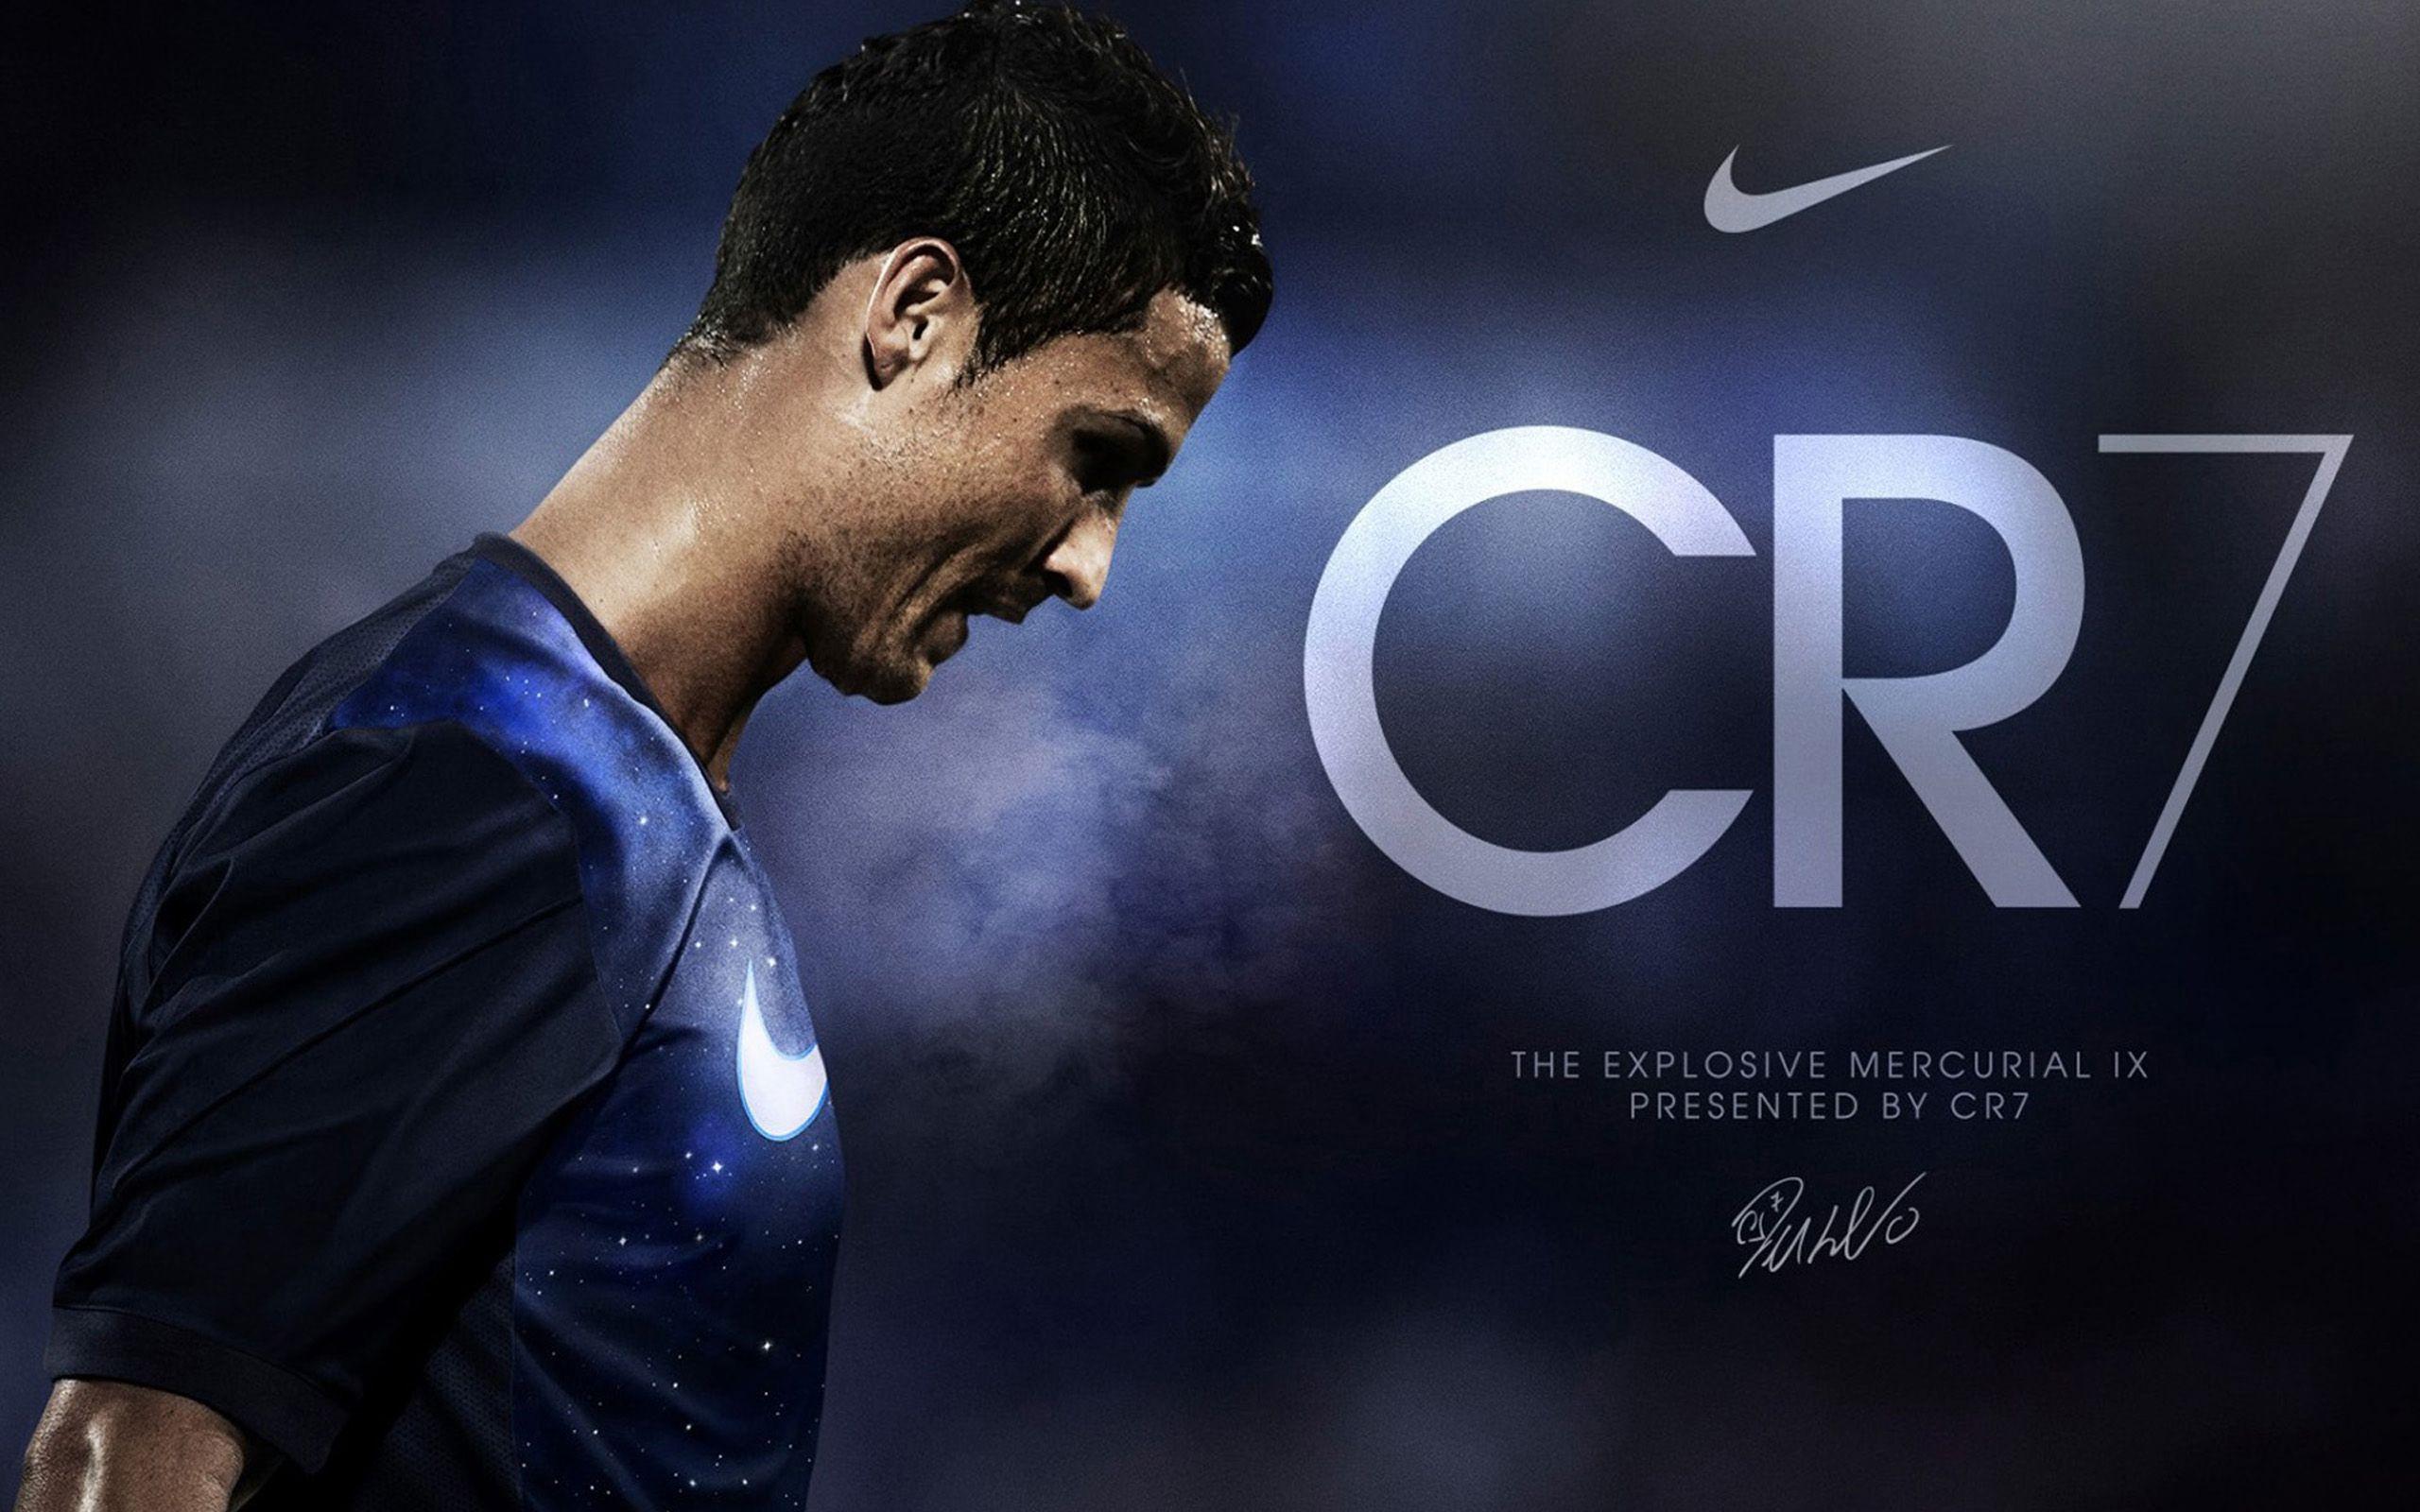 Cristiano Ronaldo Celebration Wallpaper High Quality with HD